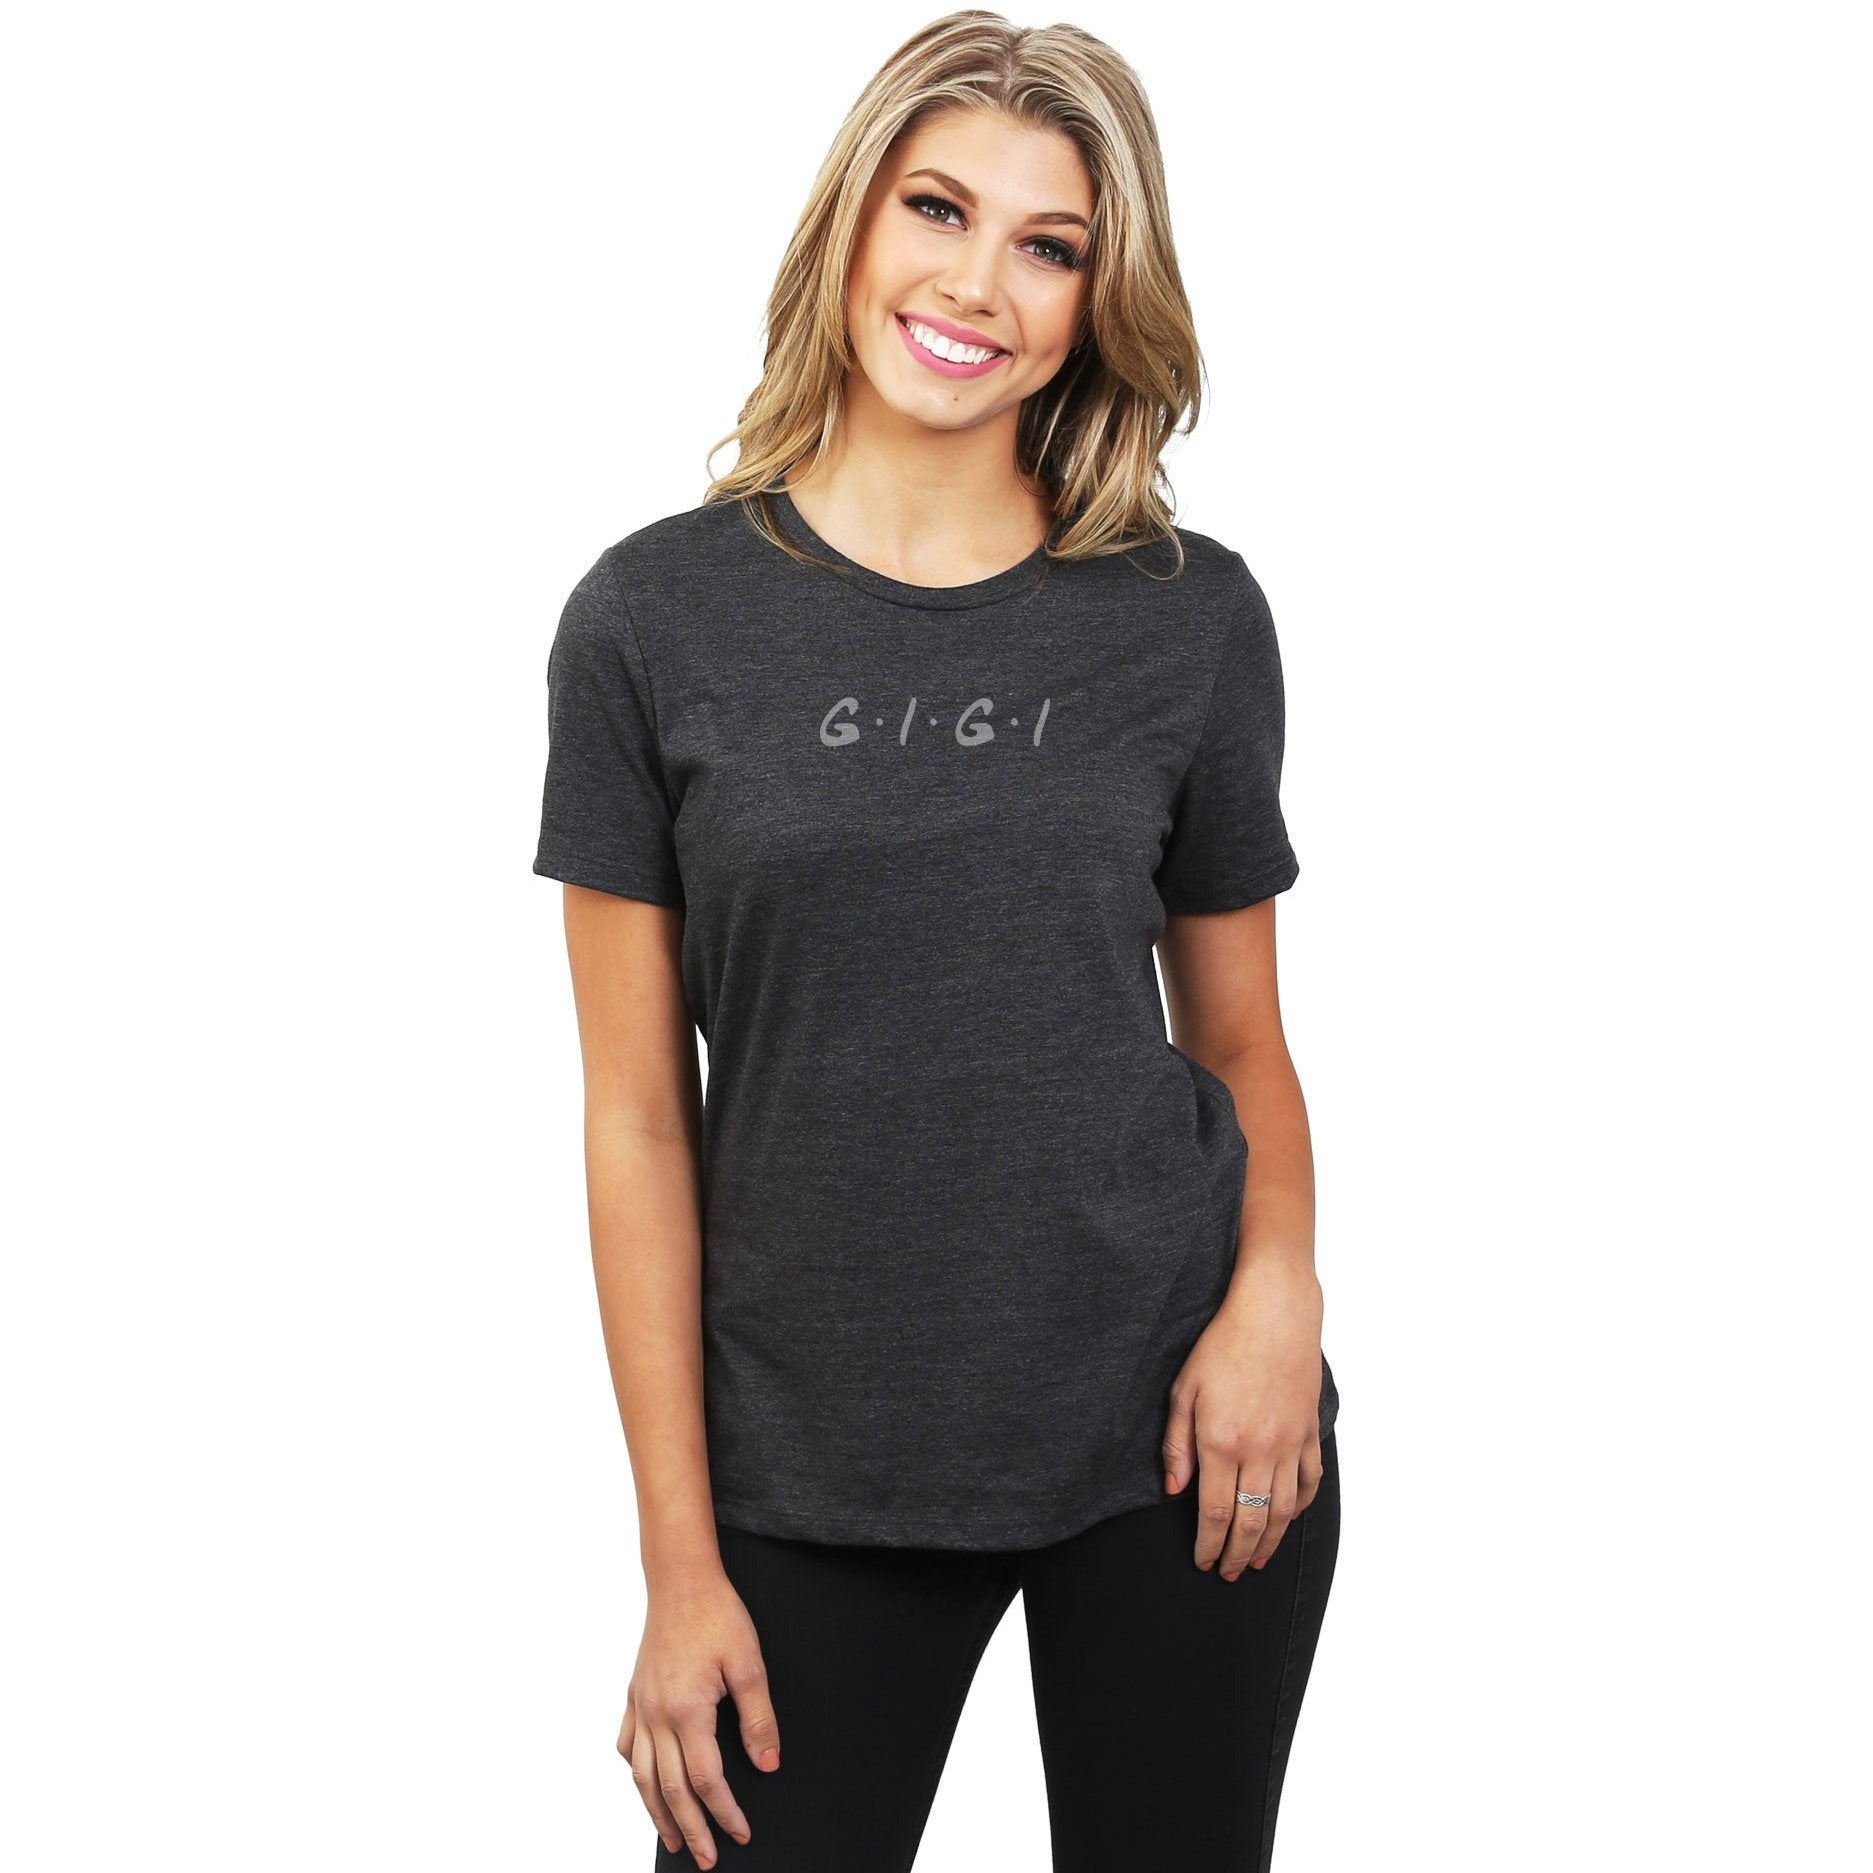 Gigi Friends Women's Relaxed Crewneck T-Shirt Top Tee Charcoal Model
